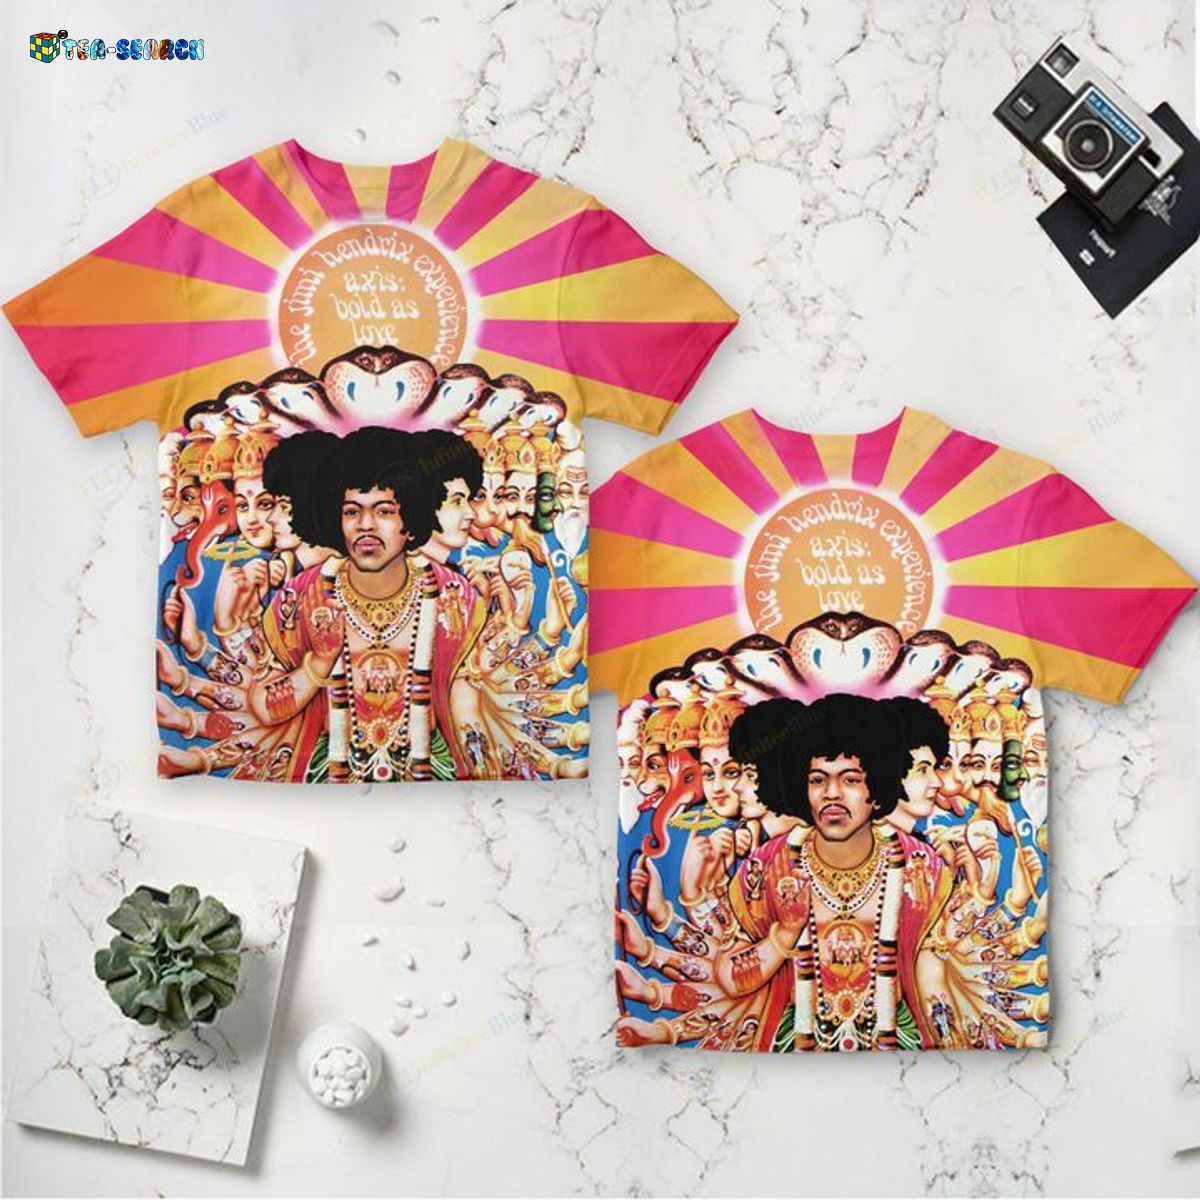 Welcome Jimi Hendrix Bold as Love 3D T-Shirt